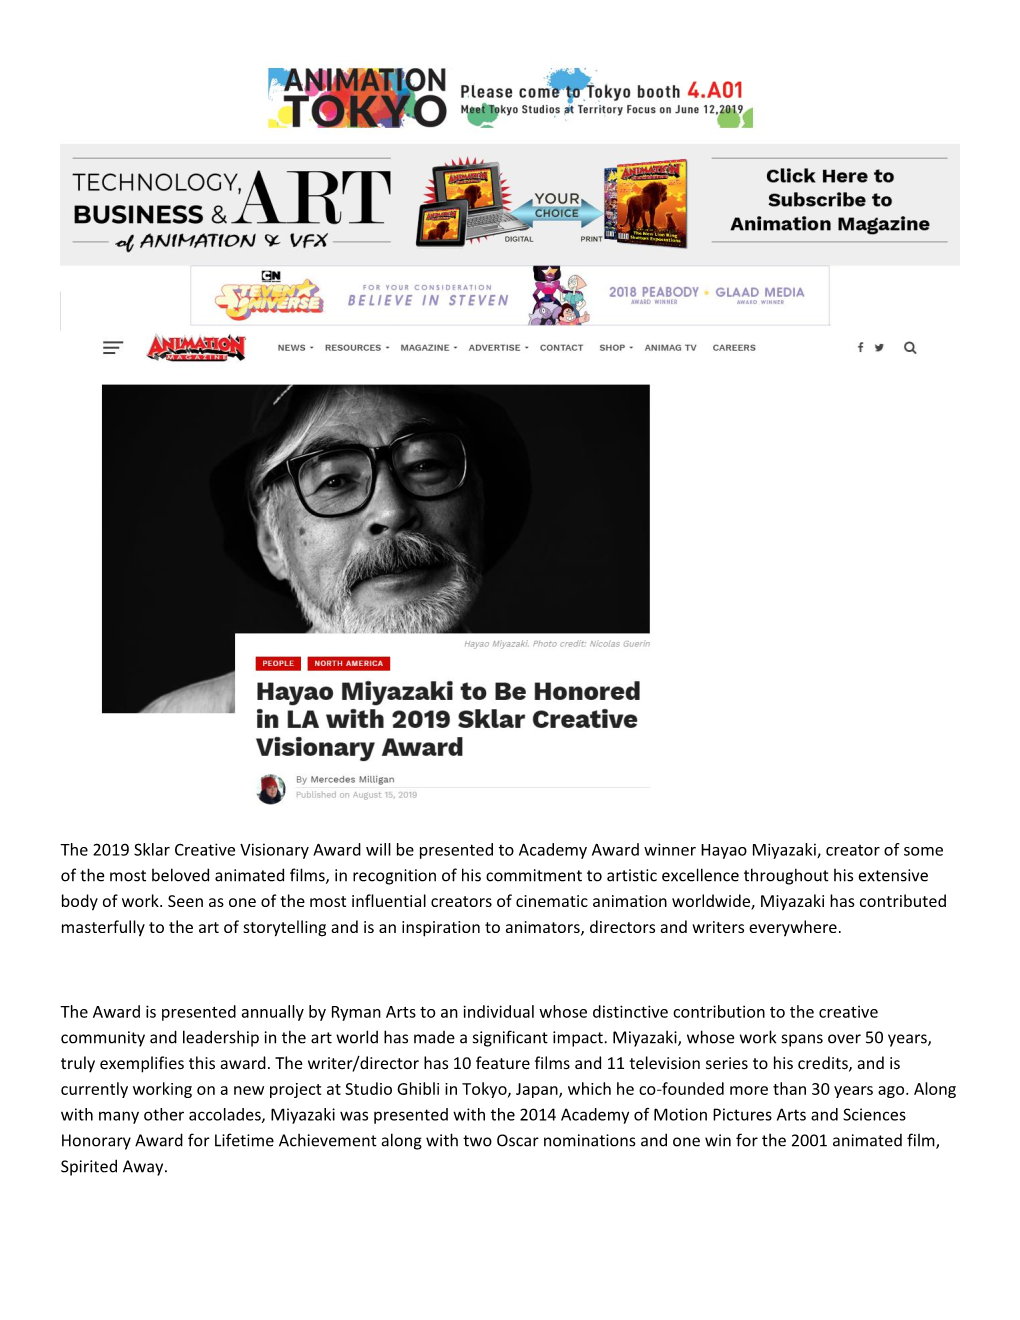 Hayao Miyazaki to Be Honored in LA with 2019 Sklar Creative Visionary